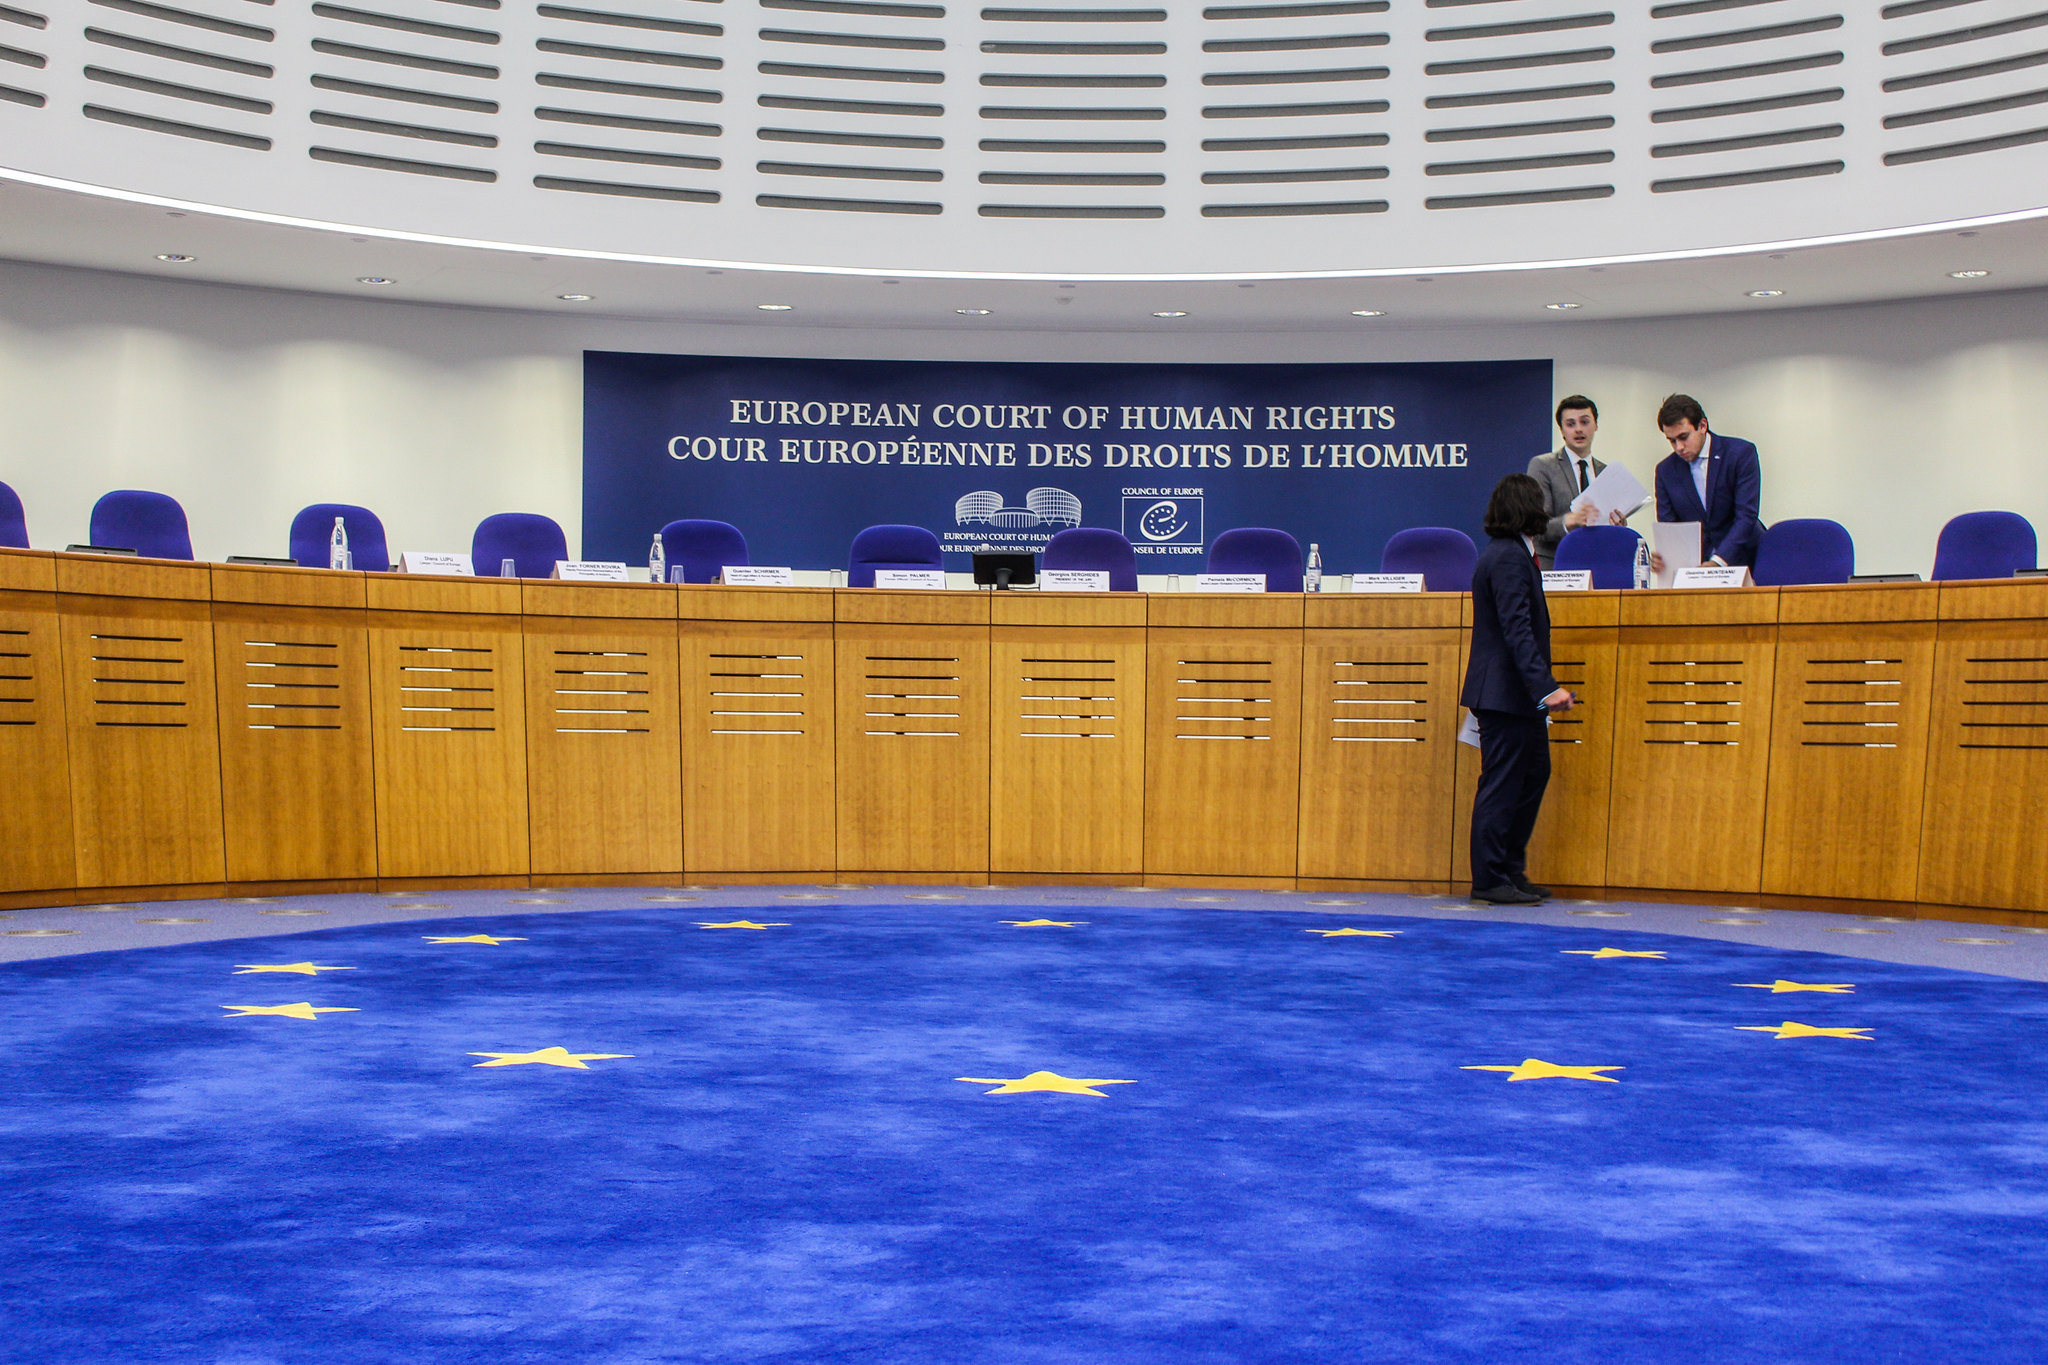 European Court of Human Rights. © Ivan Chopyk/Elsa international via Flickr